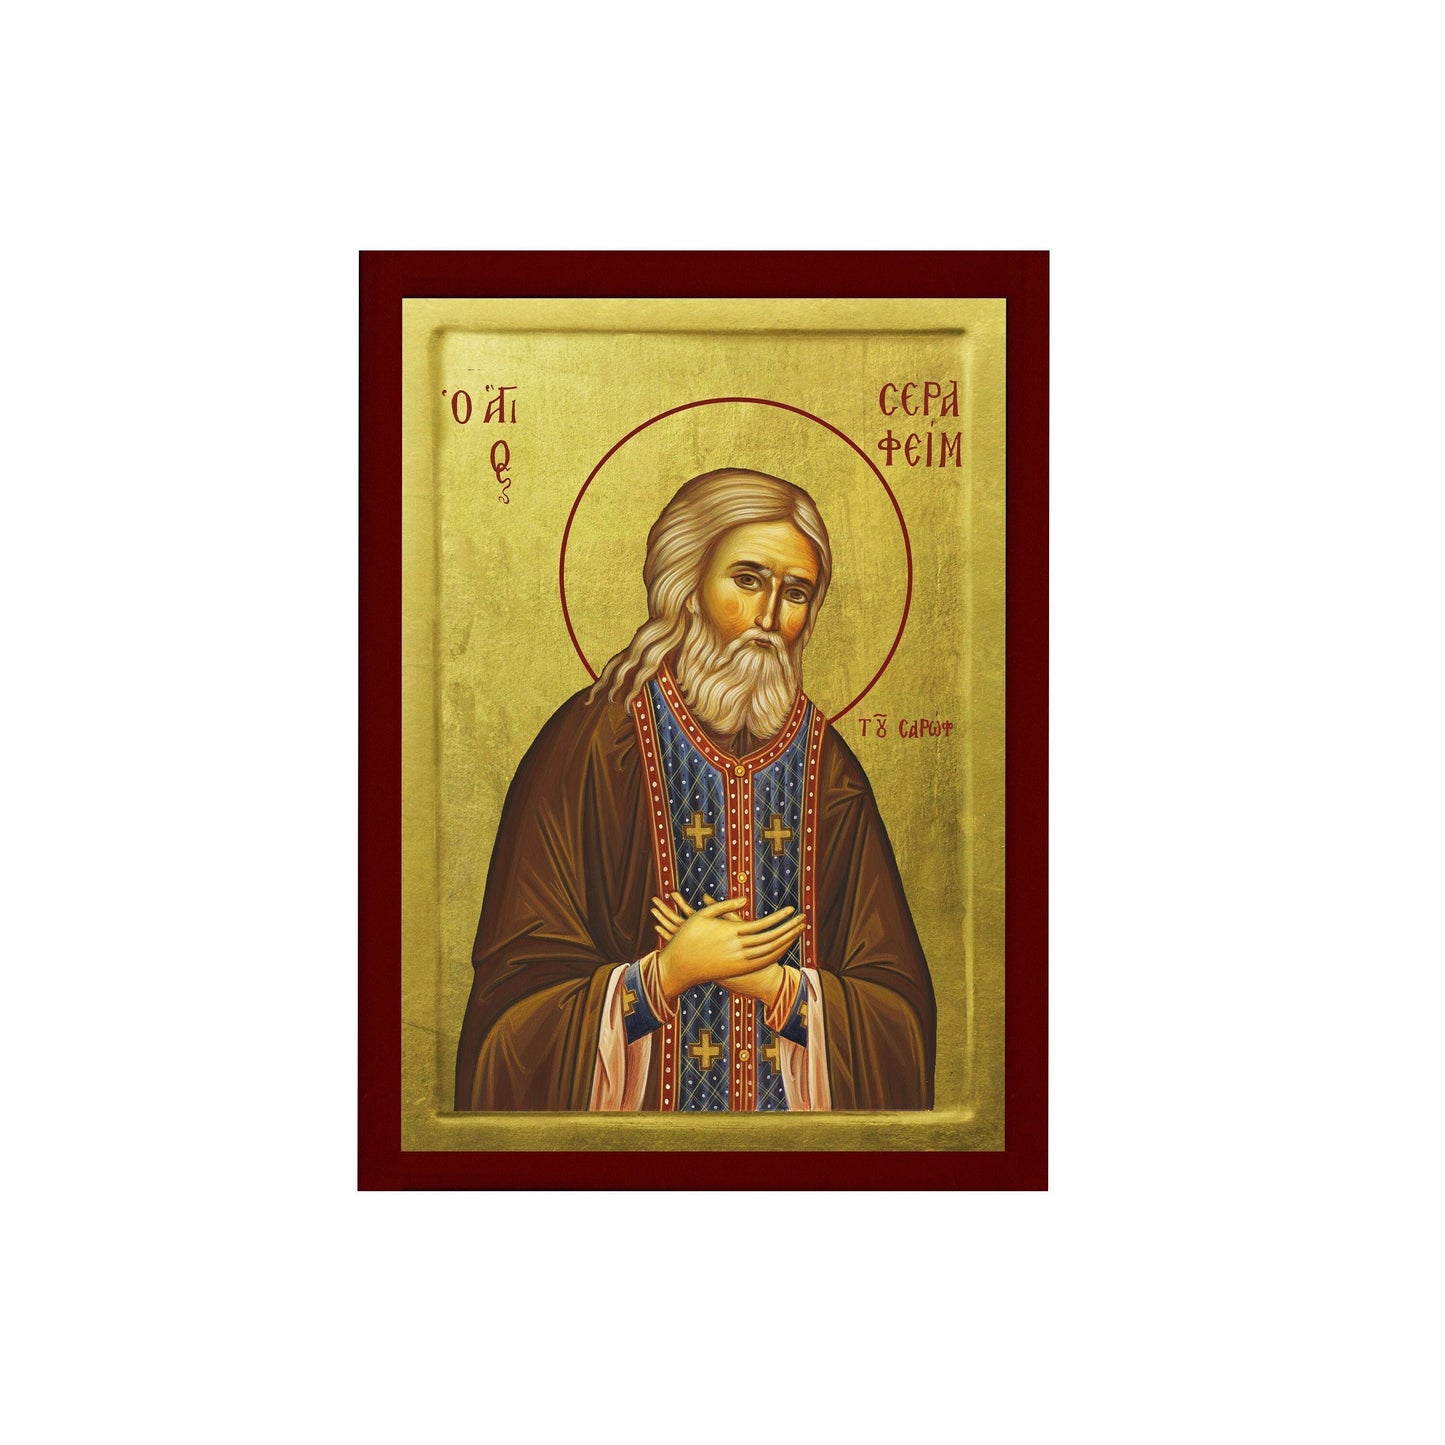 Saint Seraphim icon, Handmade Greek Orthodox icon St Seraphim of Sarov, Byzantine art wall hanging on wood plaque icon, religious decor TheHolyArt